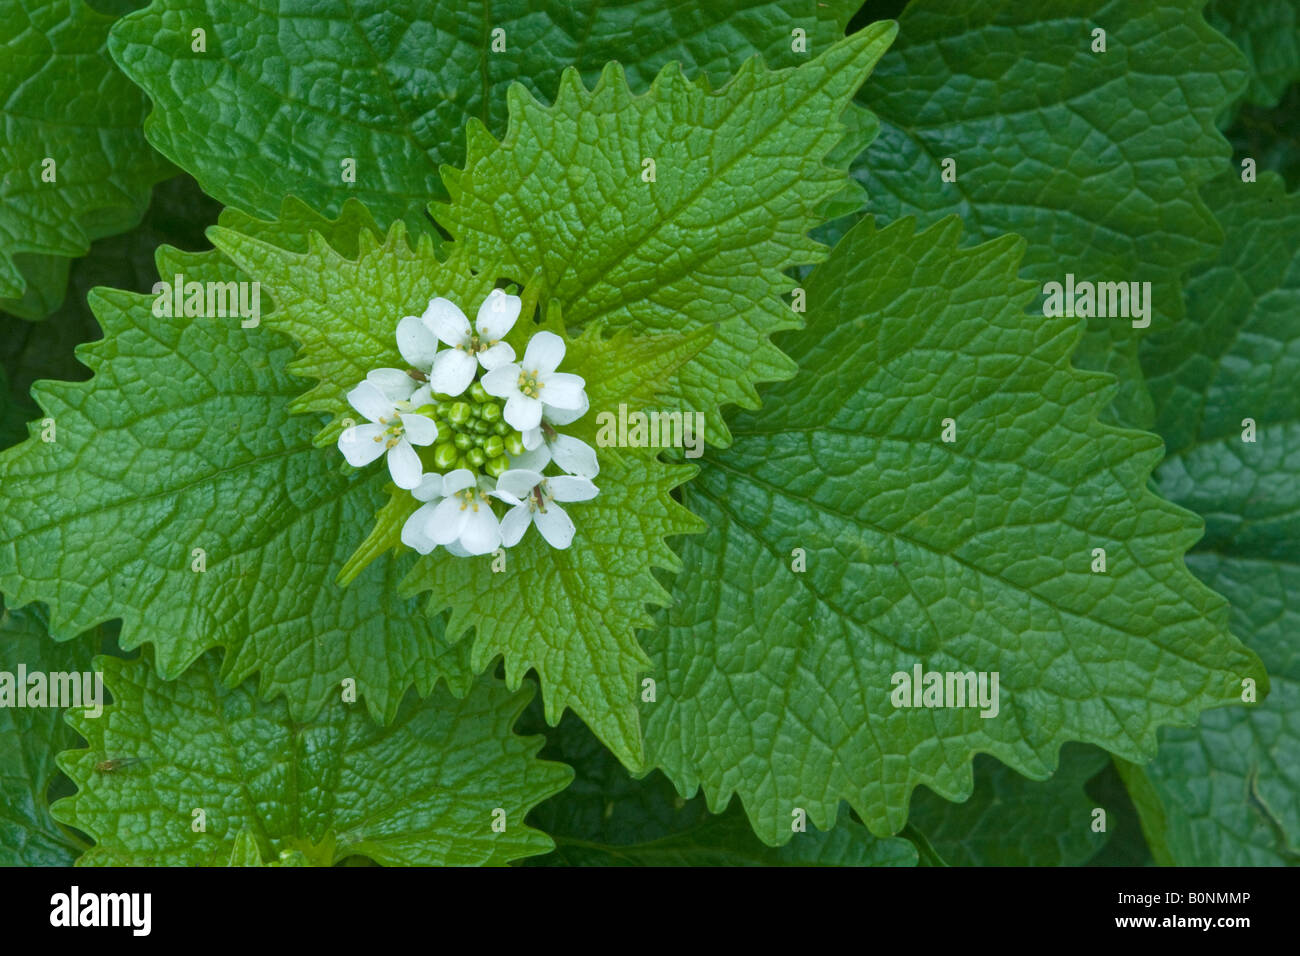 Jack-by-the-hedge, hedge garlic, or garlic mustard, Alliaria petiolata in flower. Stock Photo